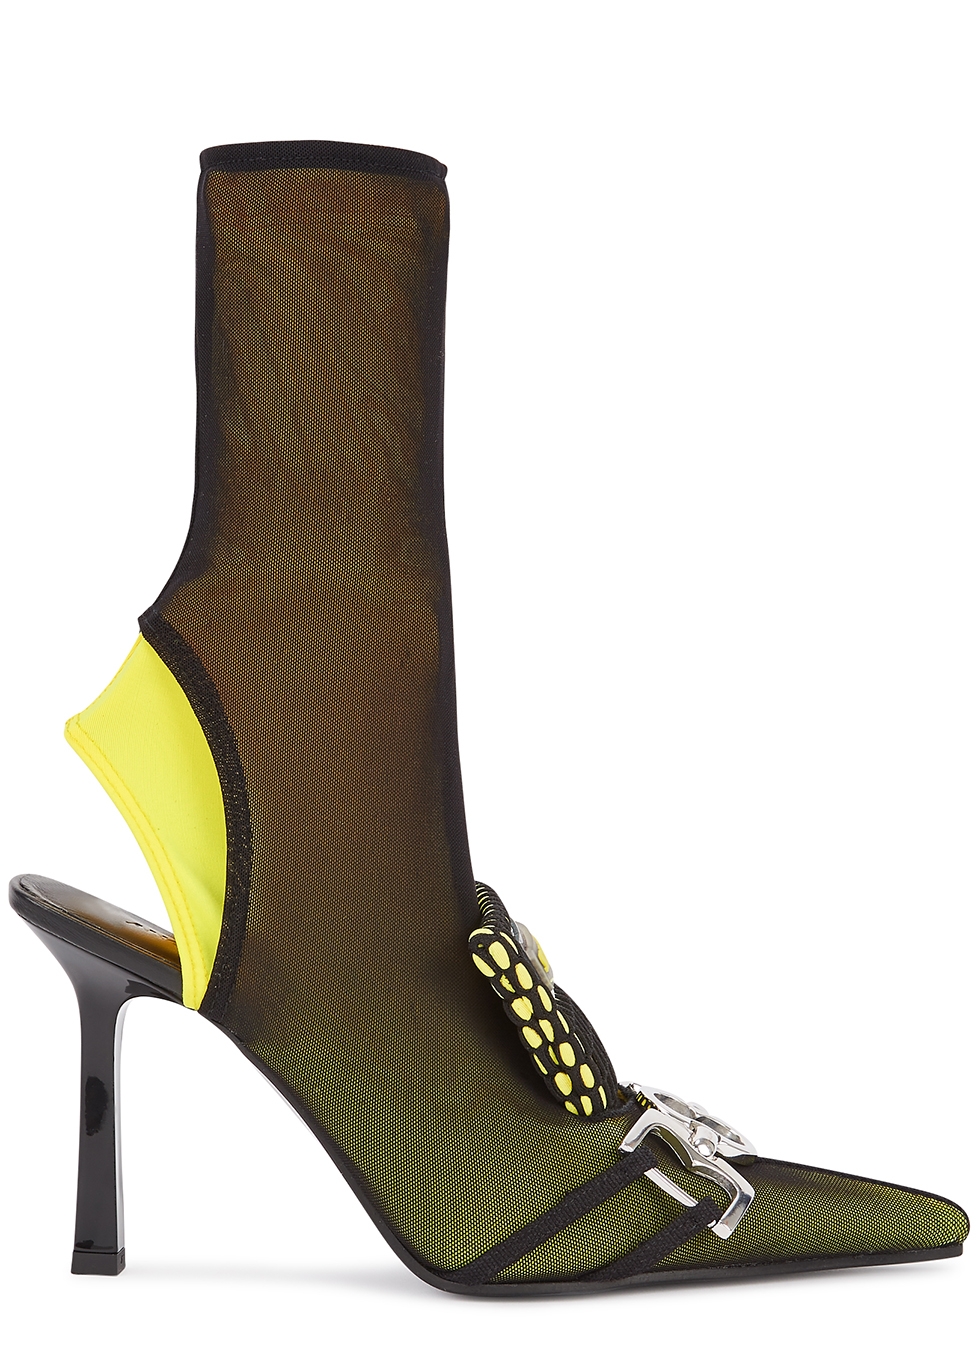 ANCUTA SARCA Lima 95 black and yellow mesh ankle boots - Harvey Nichols